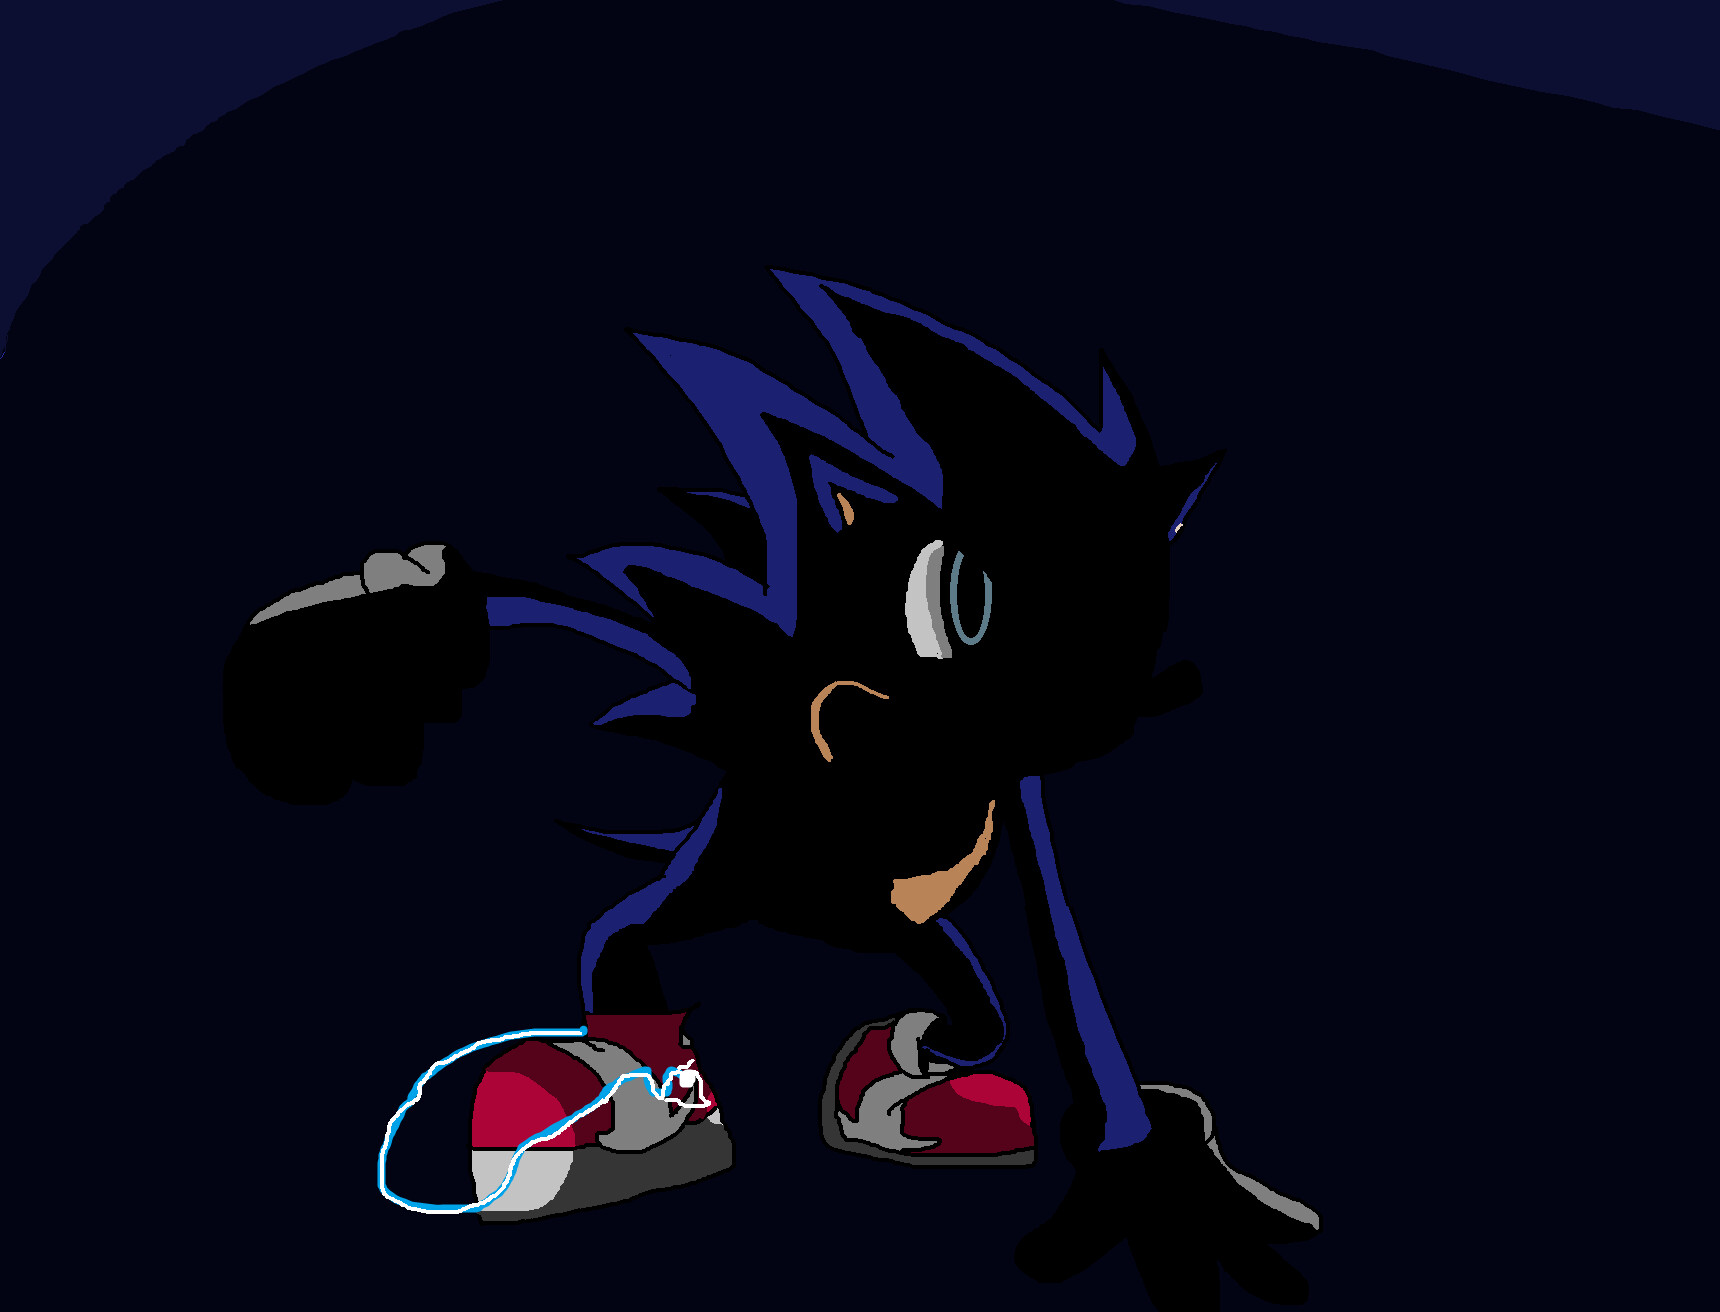 ArtStation - Dark Super Sonic